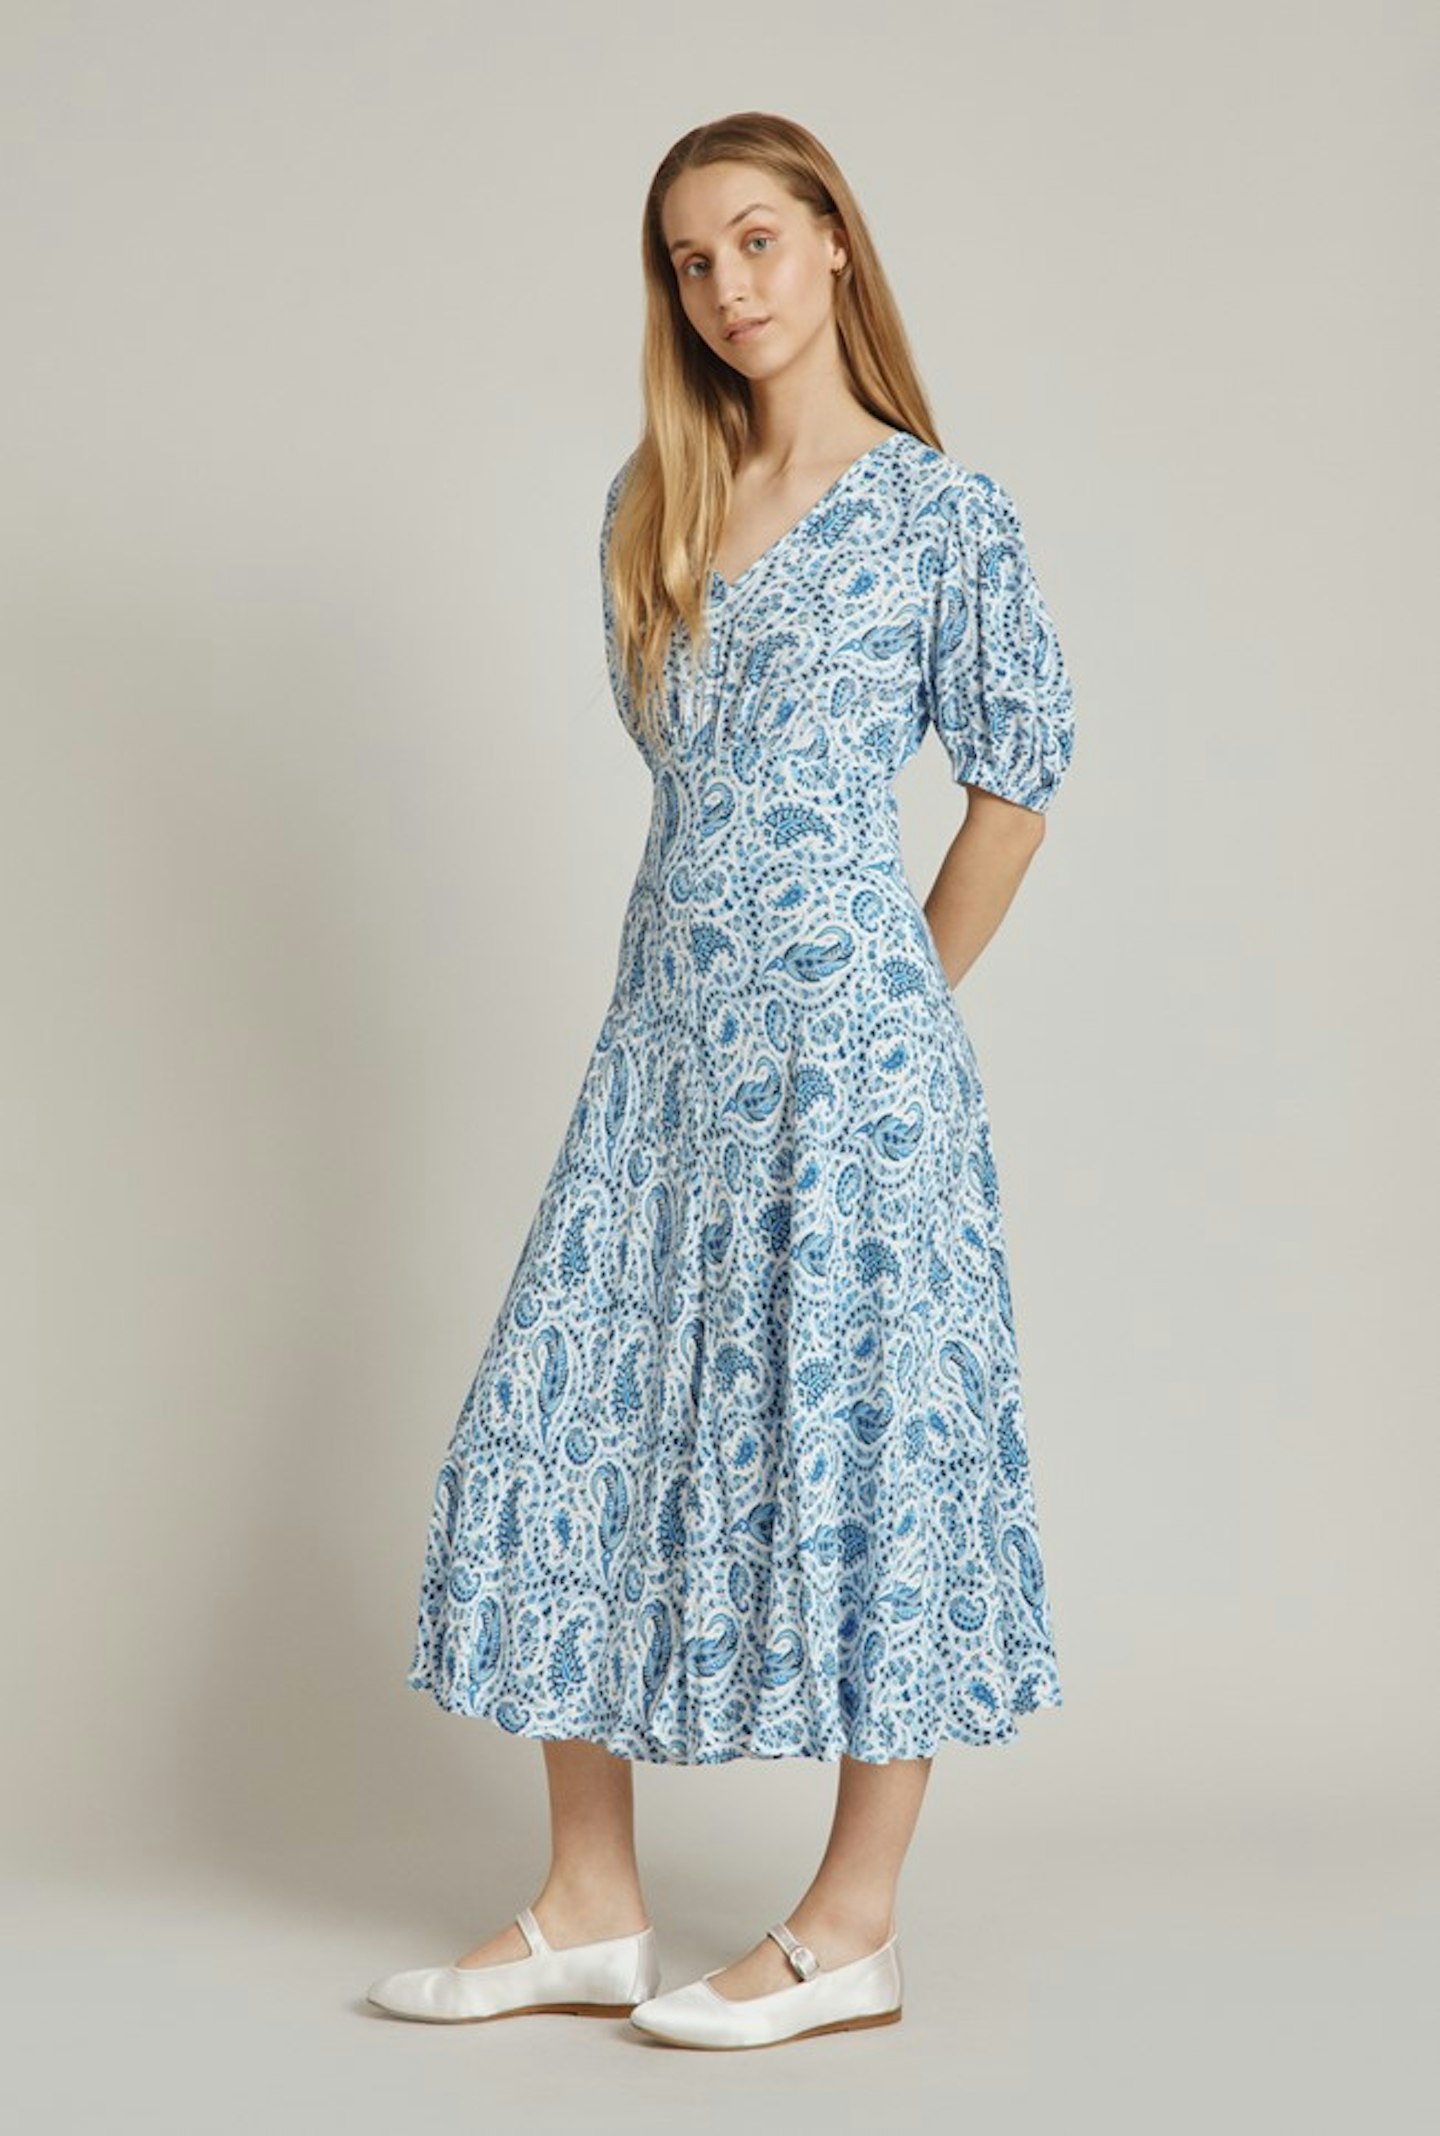 Ghost, Petra Dress Blue Paisley, £129